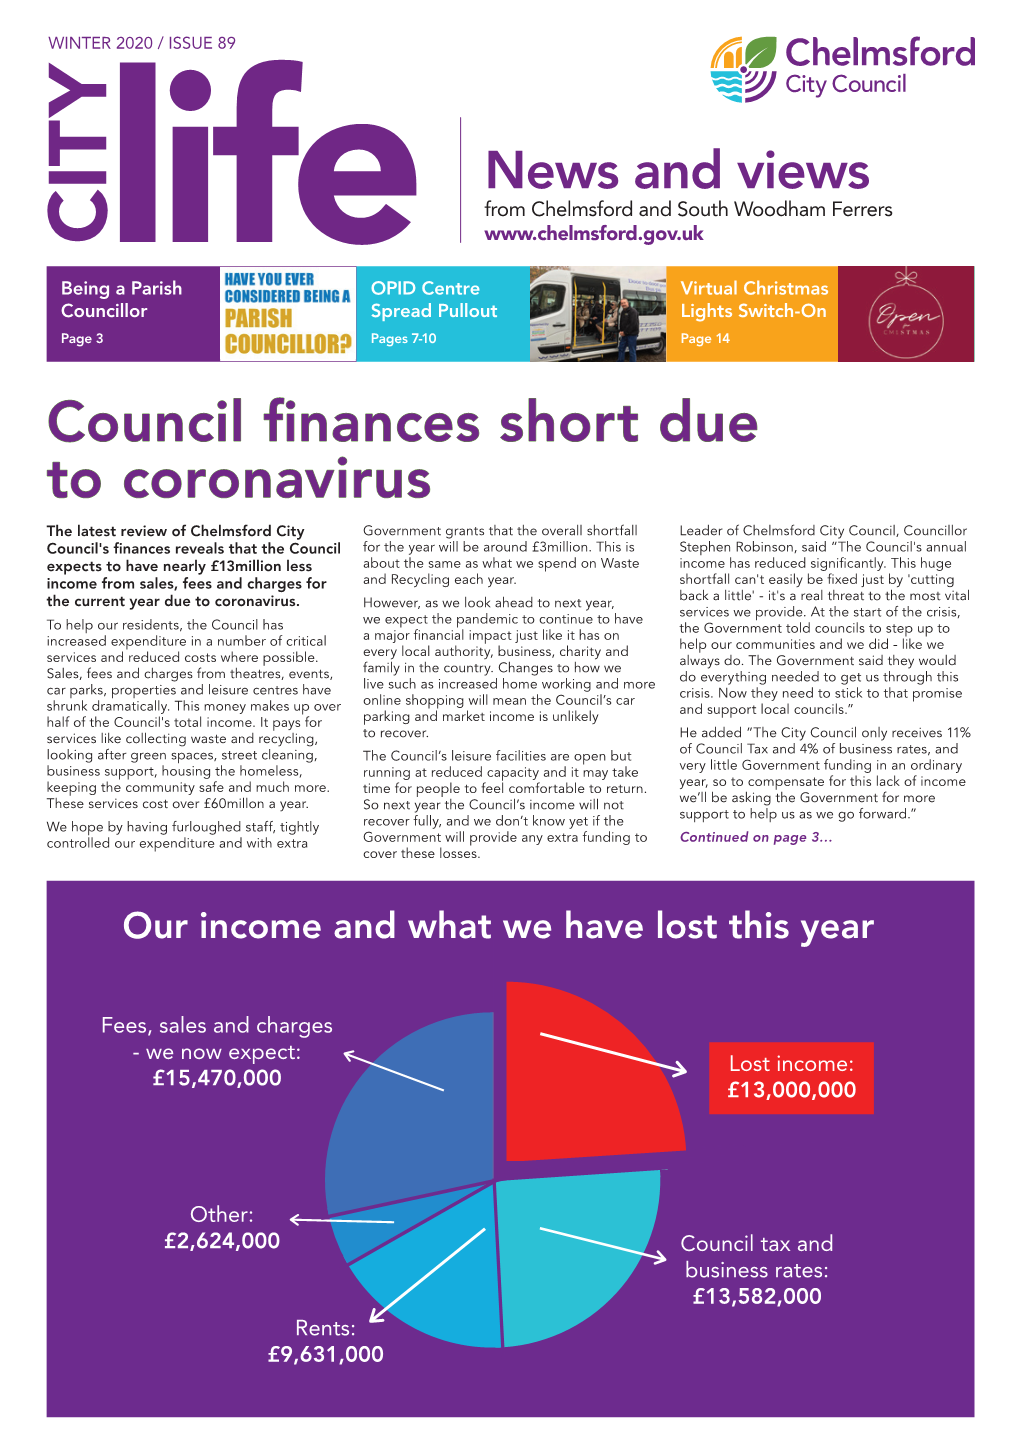 Council Finances Short Due to Coronavirus